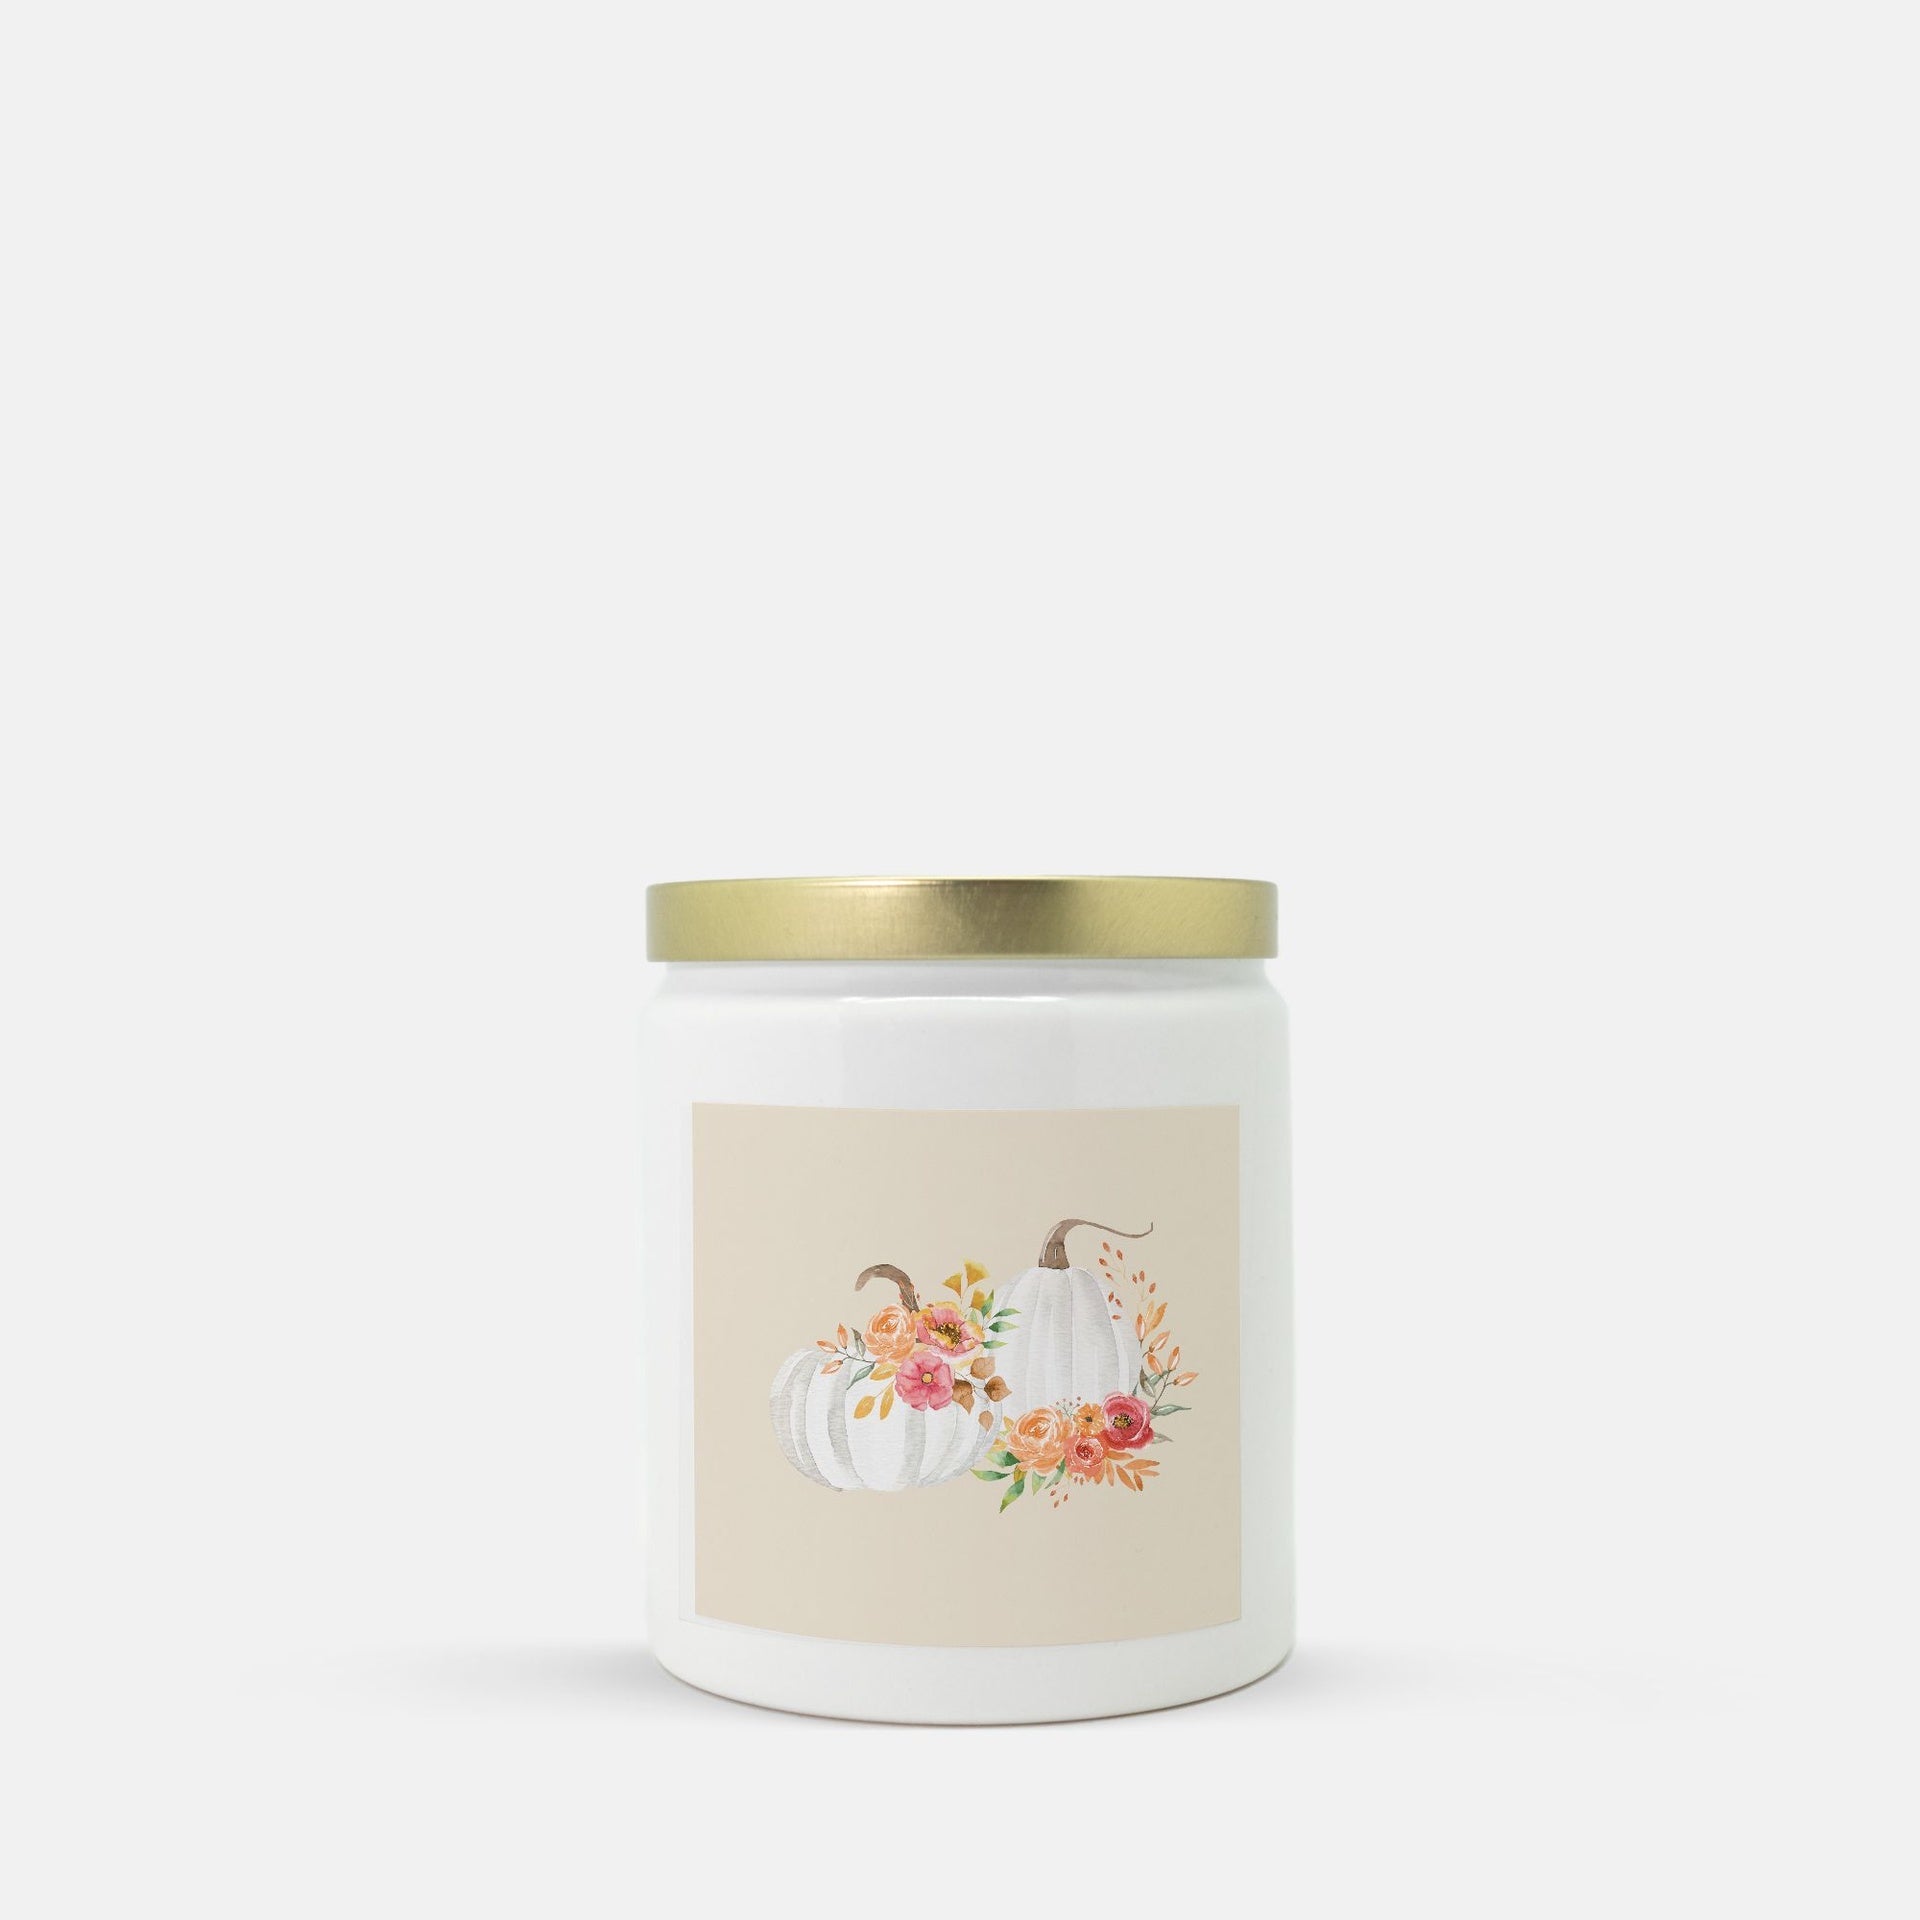 Lifestyle Details - White Pumpkins Watercolor Ceramic Candle w Gold Lid - Macintosh